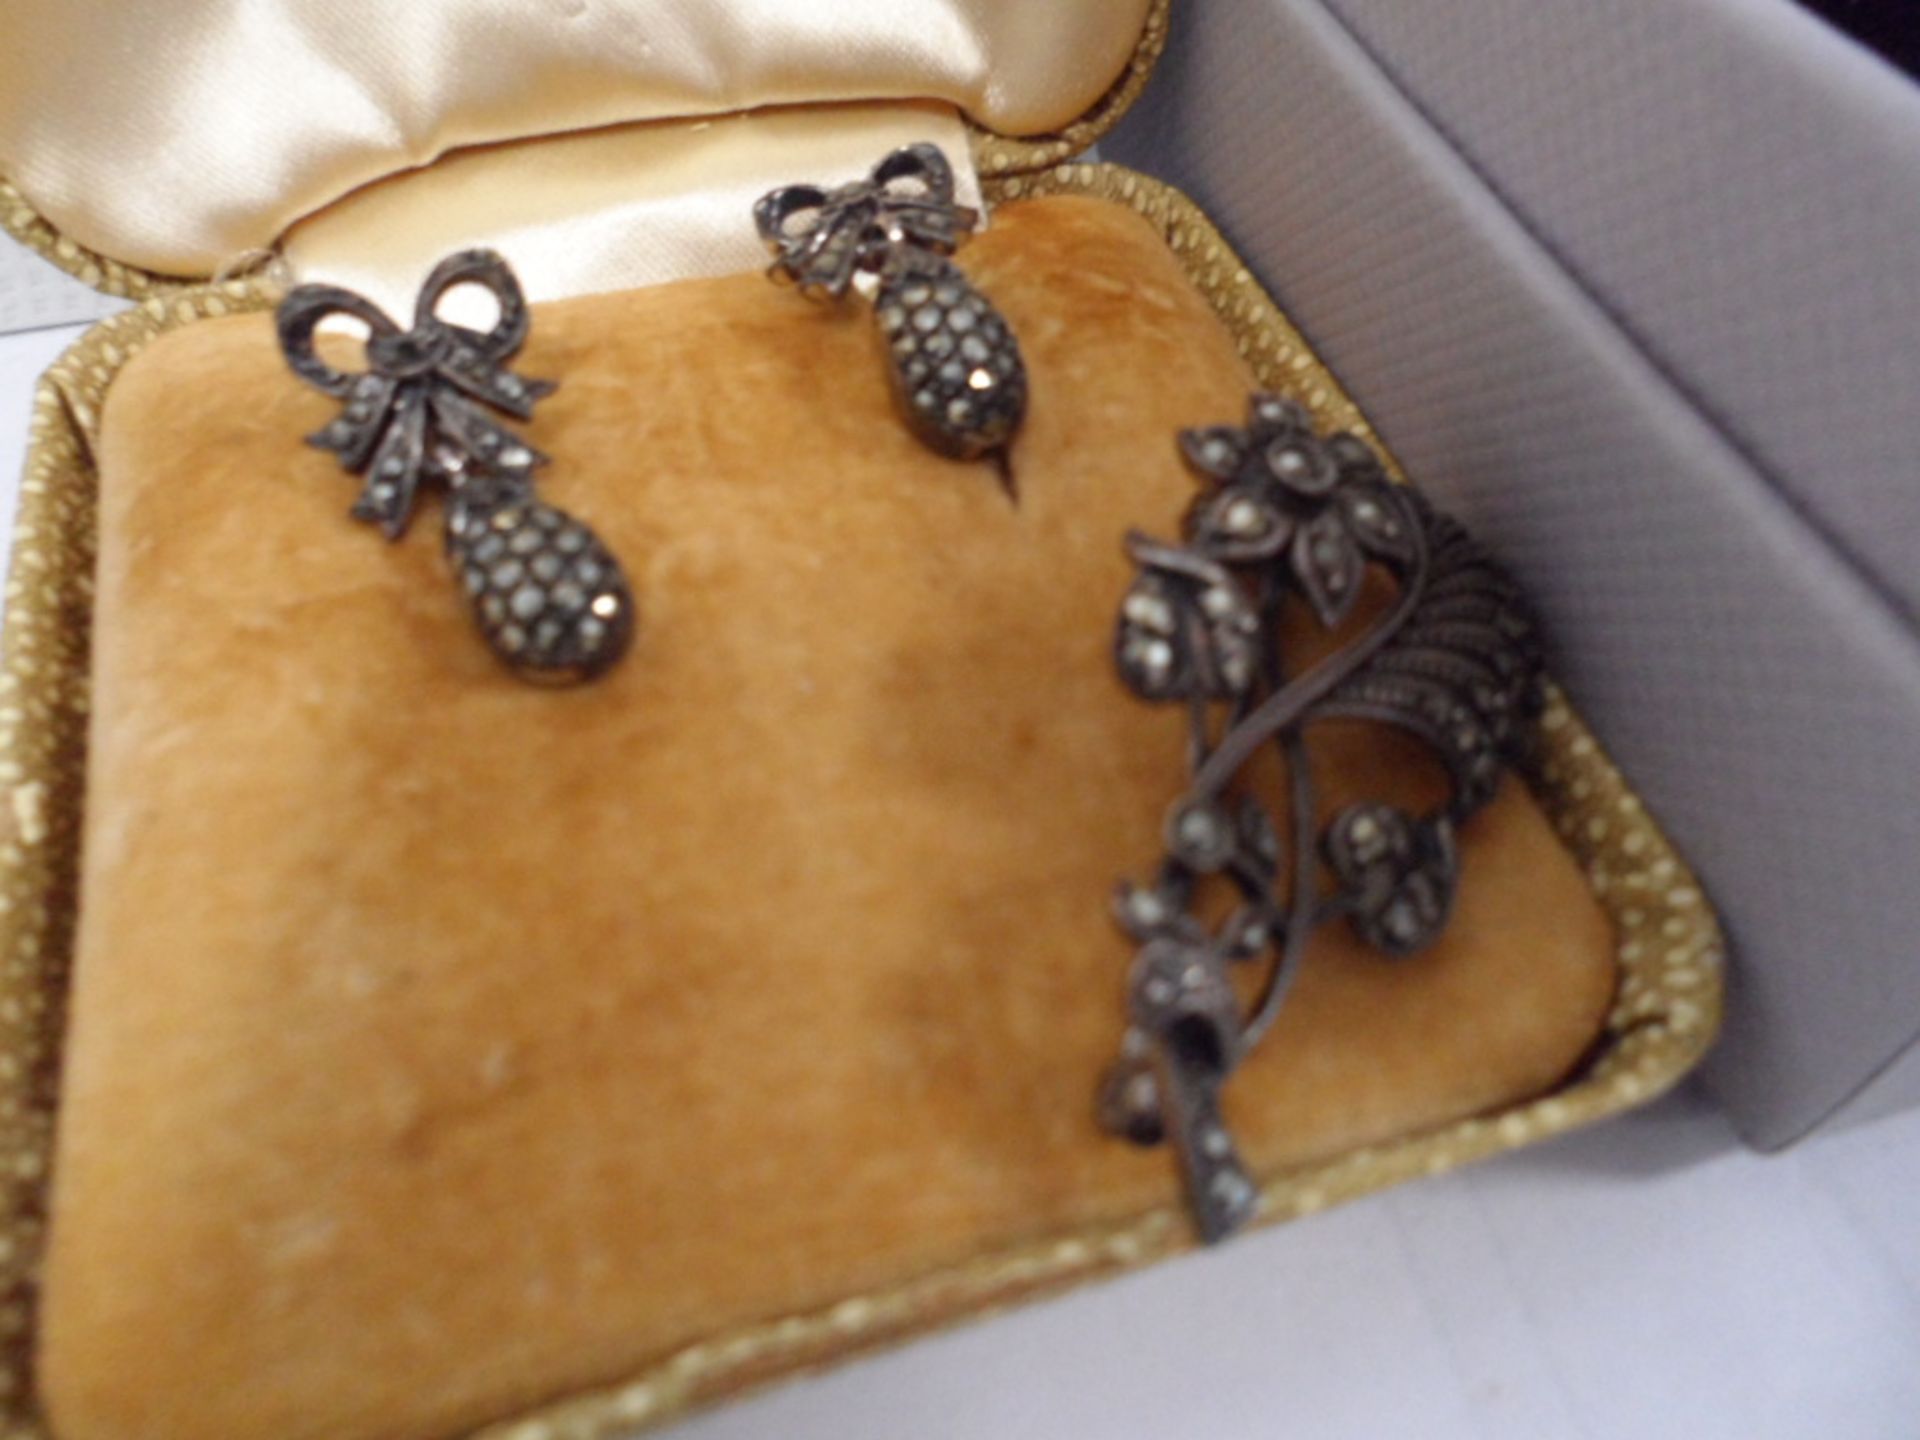 Bag containing jewellery by Calvin Klein, Warren James, Pandora, etc - Image 3 of 3